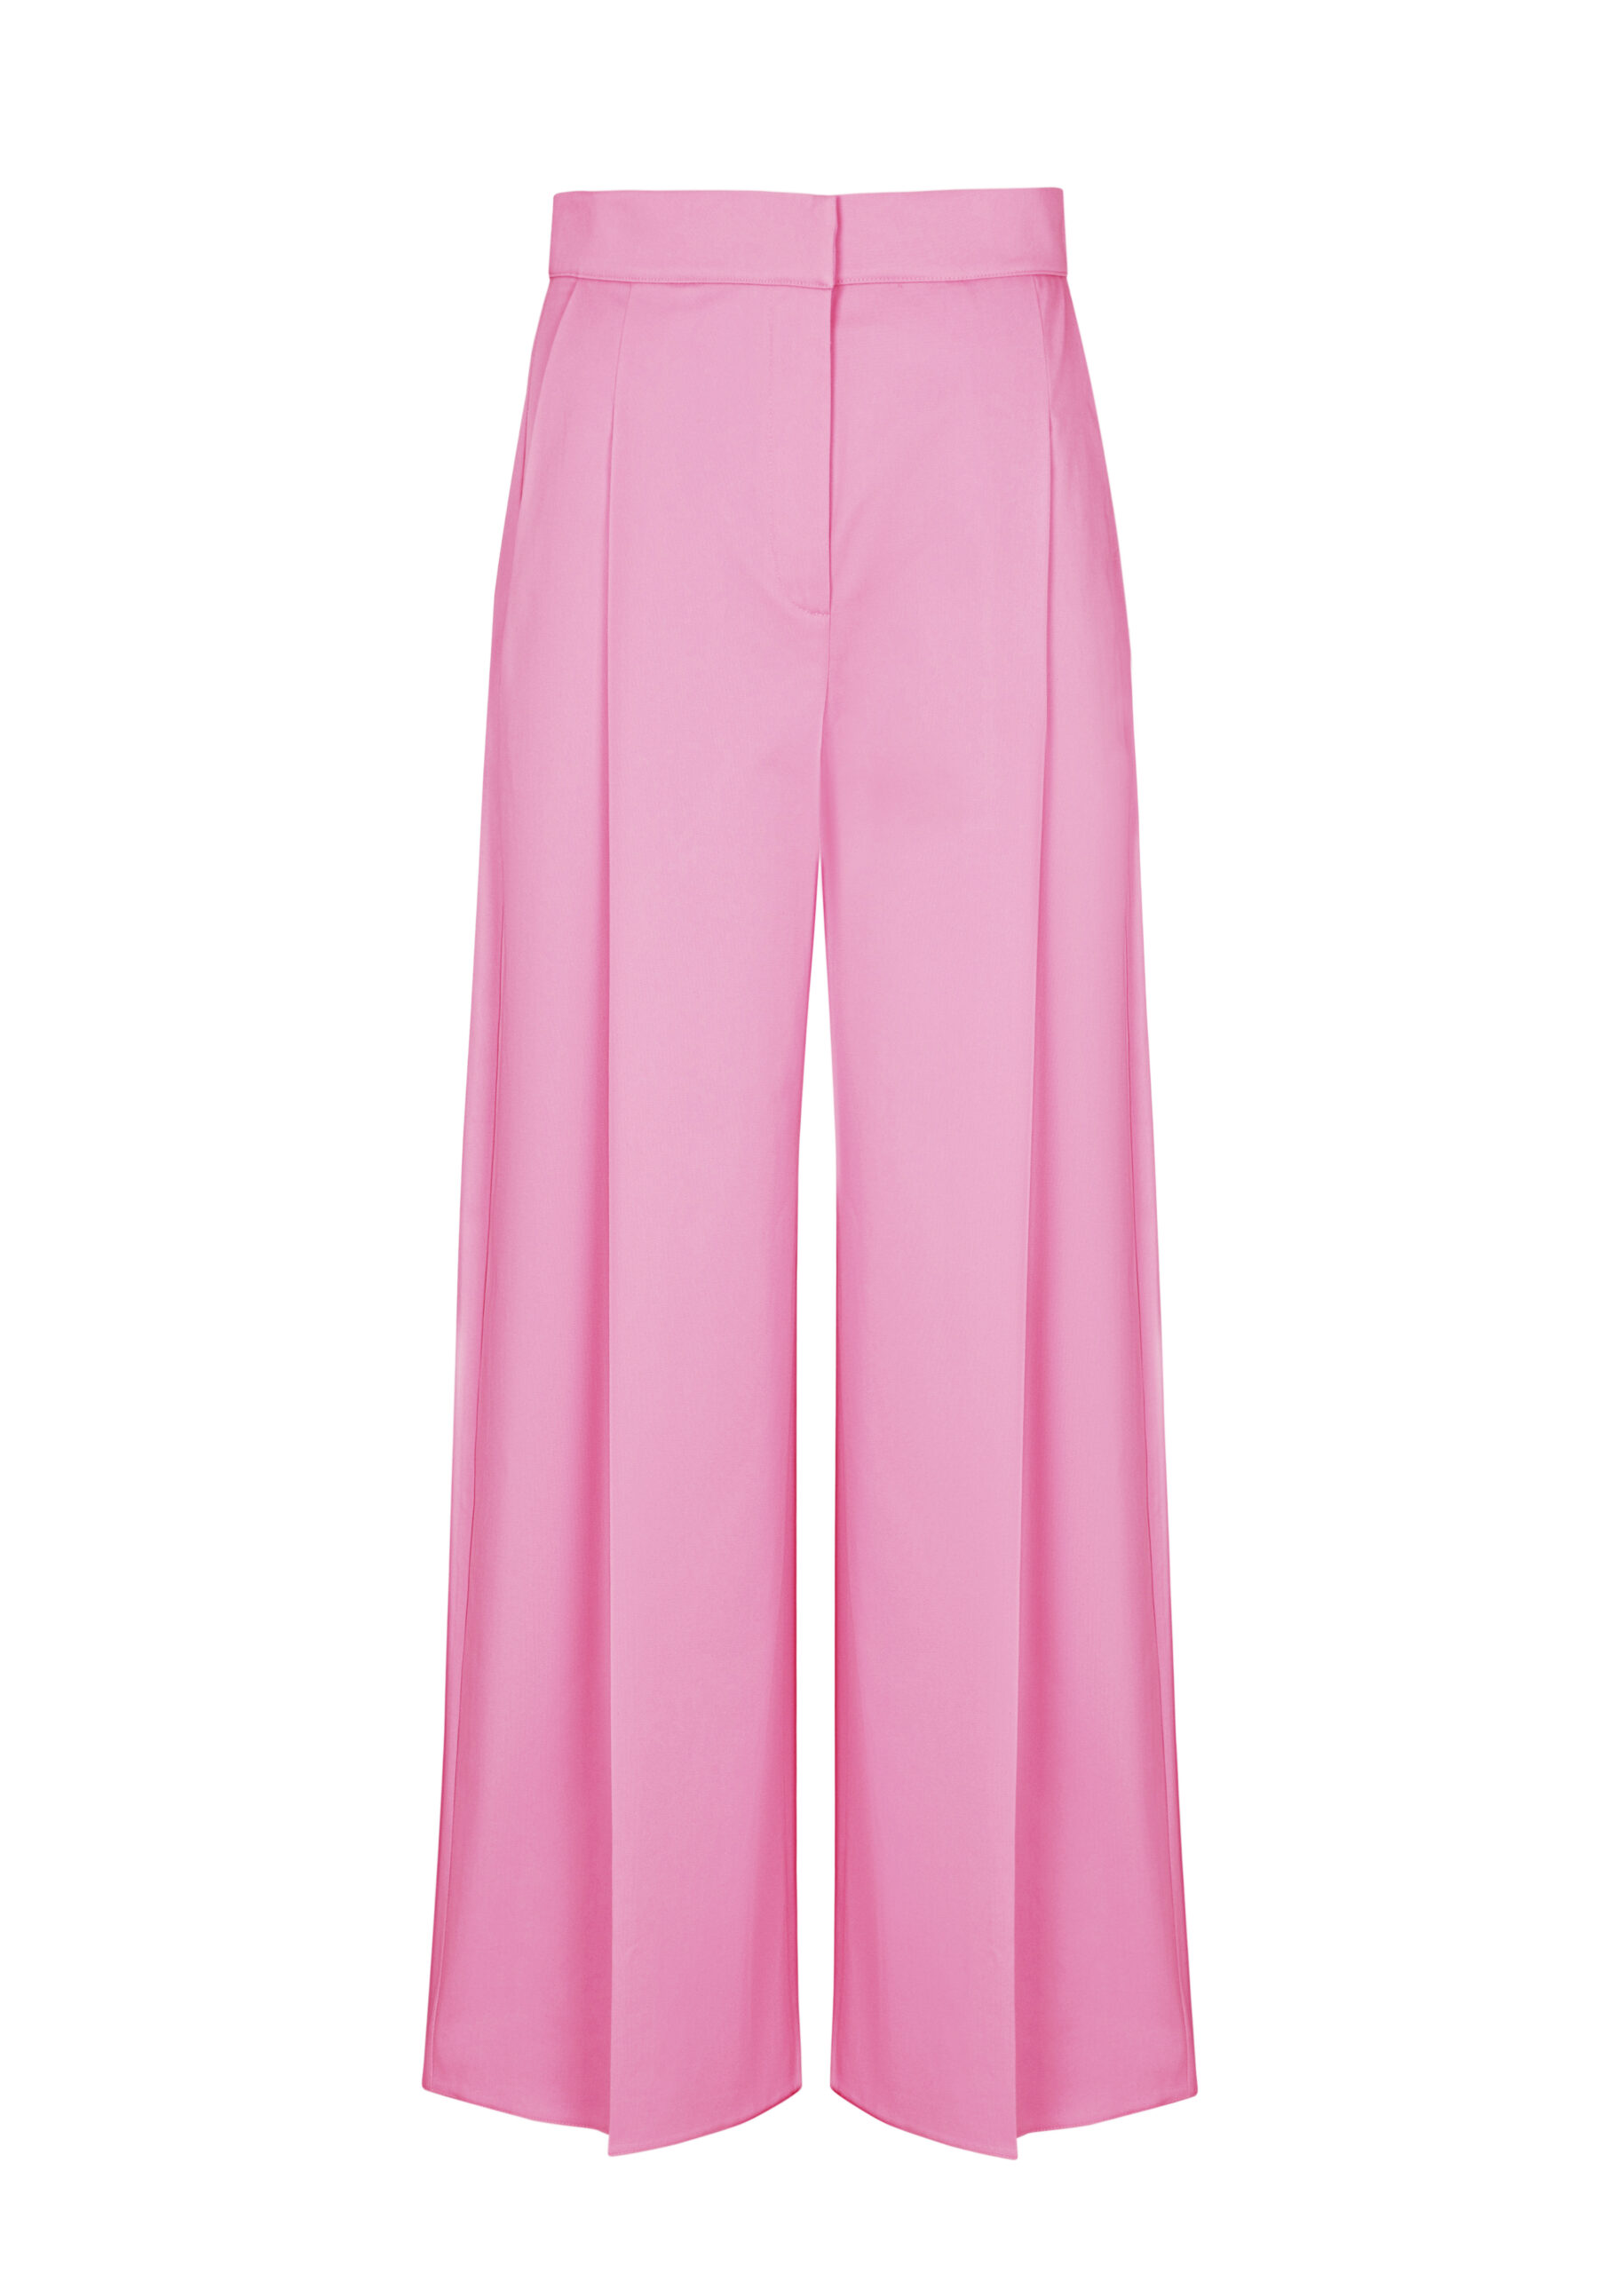 Pink Culotte Pants - F.ILKK